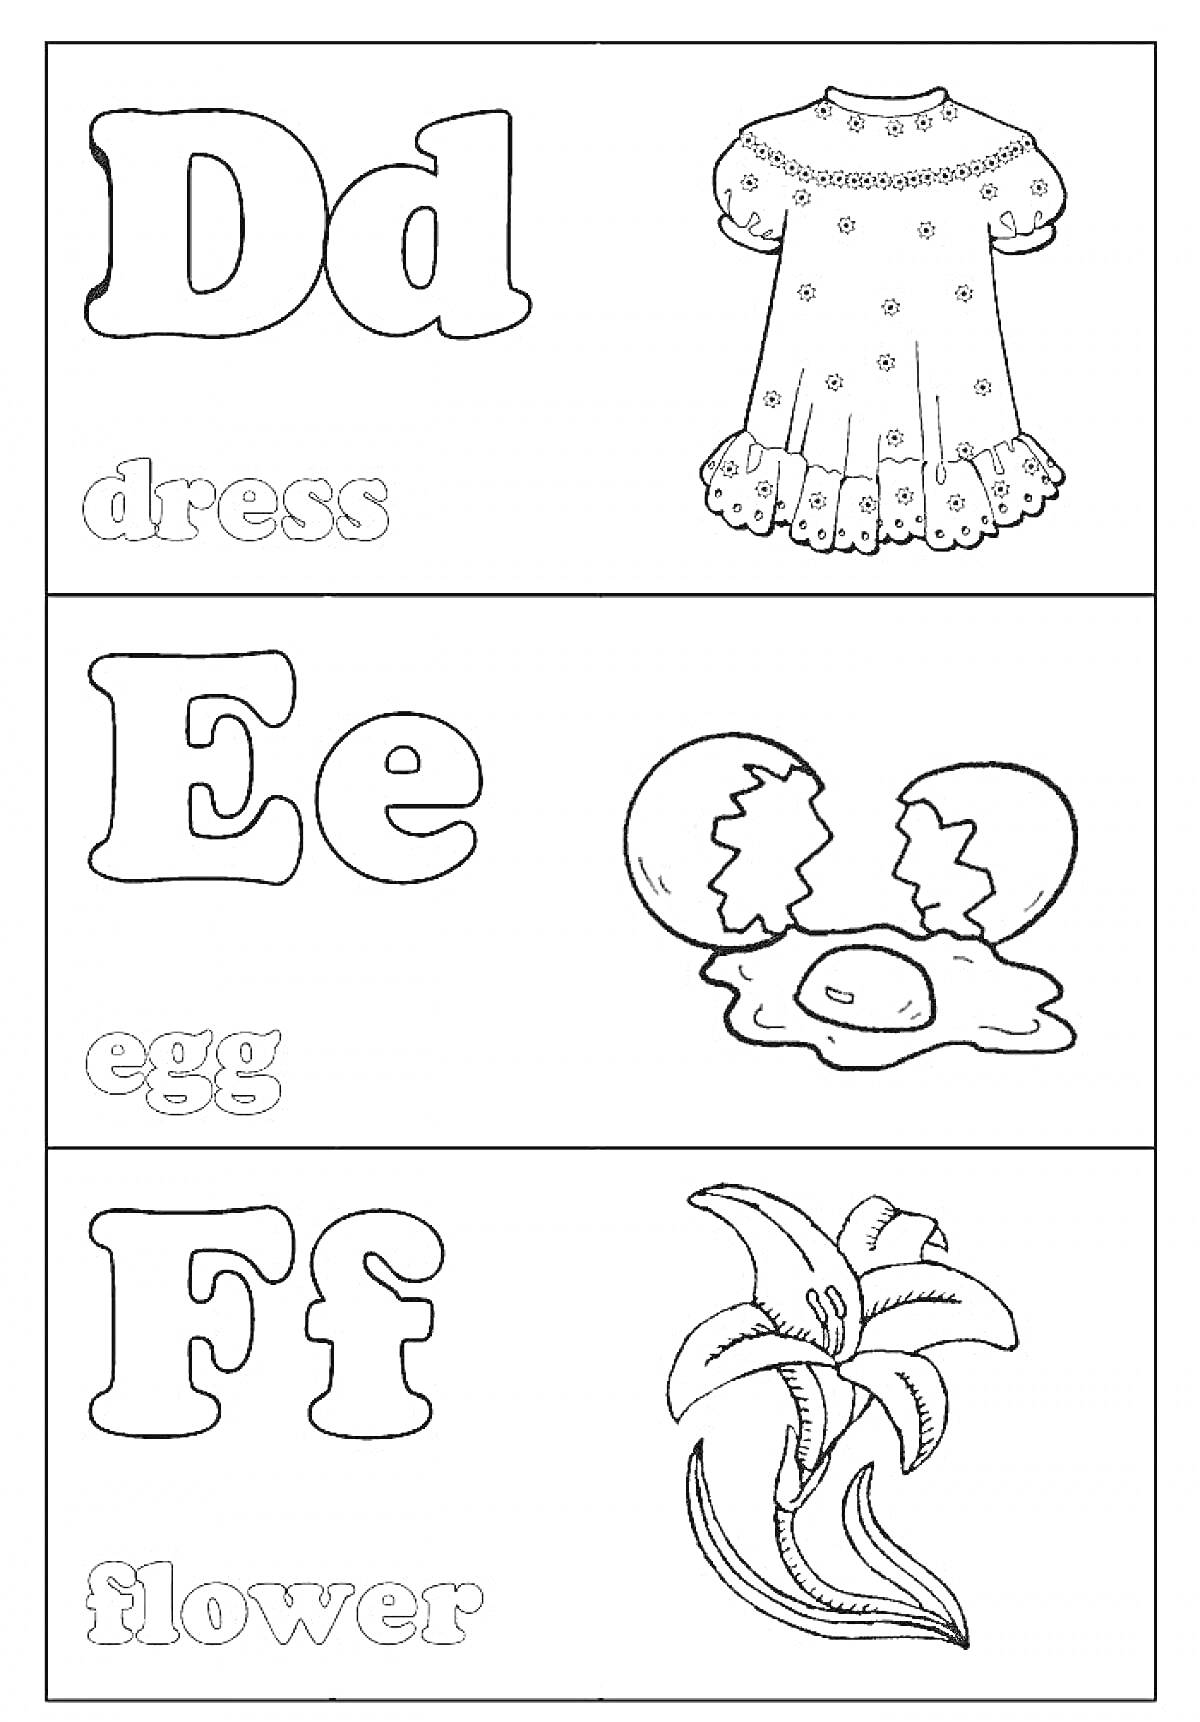 Раскраска Английский алфавит - D, E, F: платье, яйцо, цветок